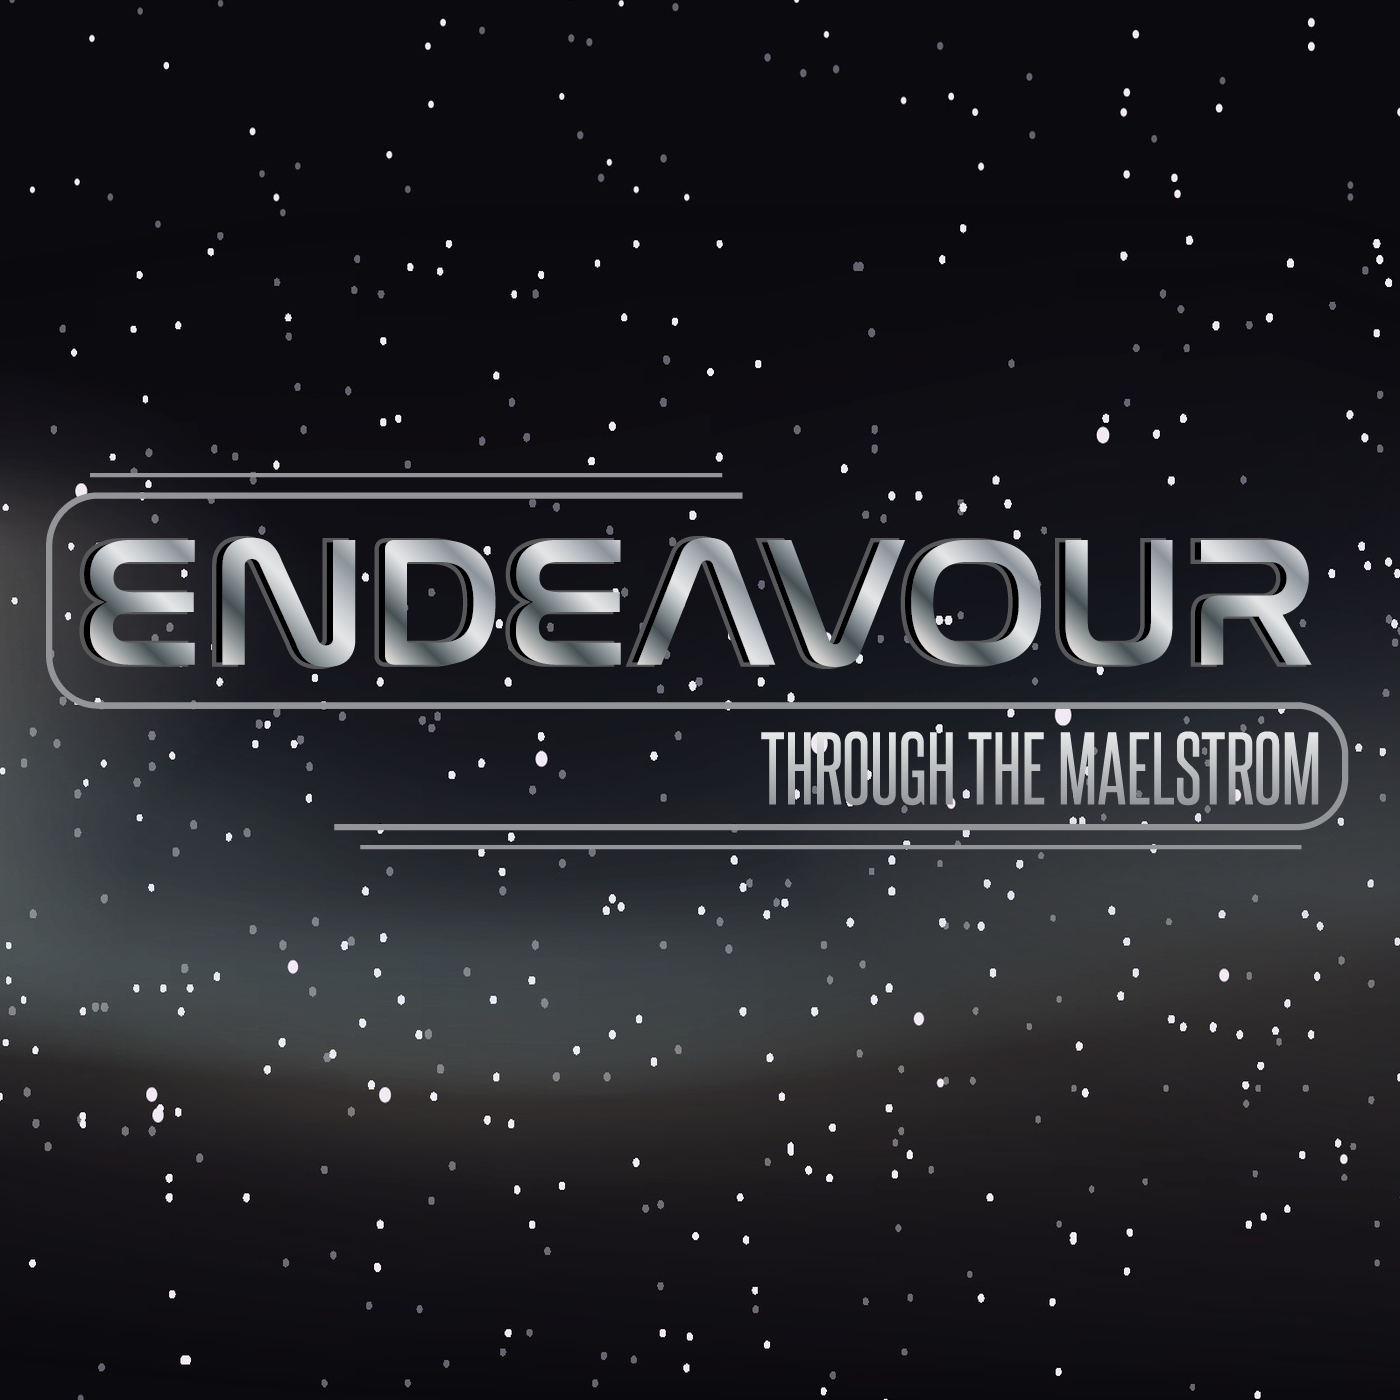 Endeavour: Through the Maelstrom